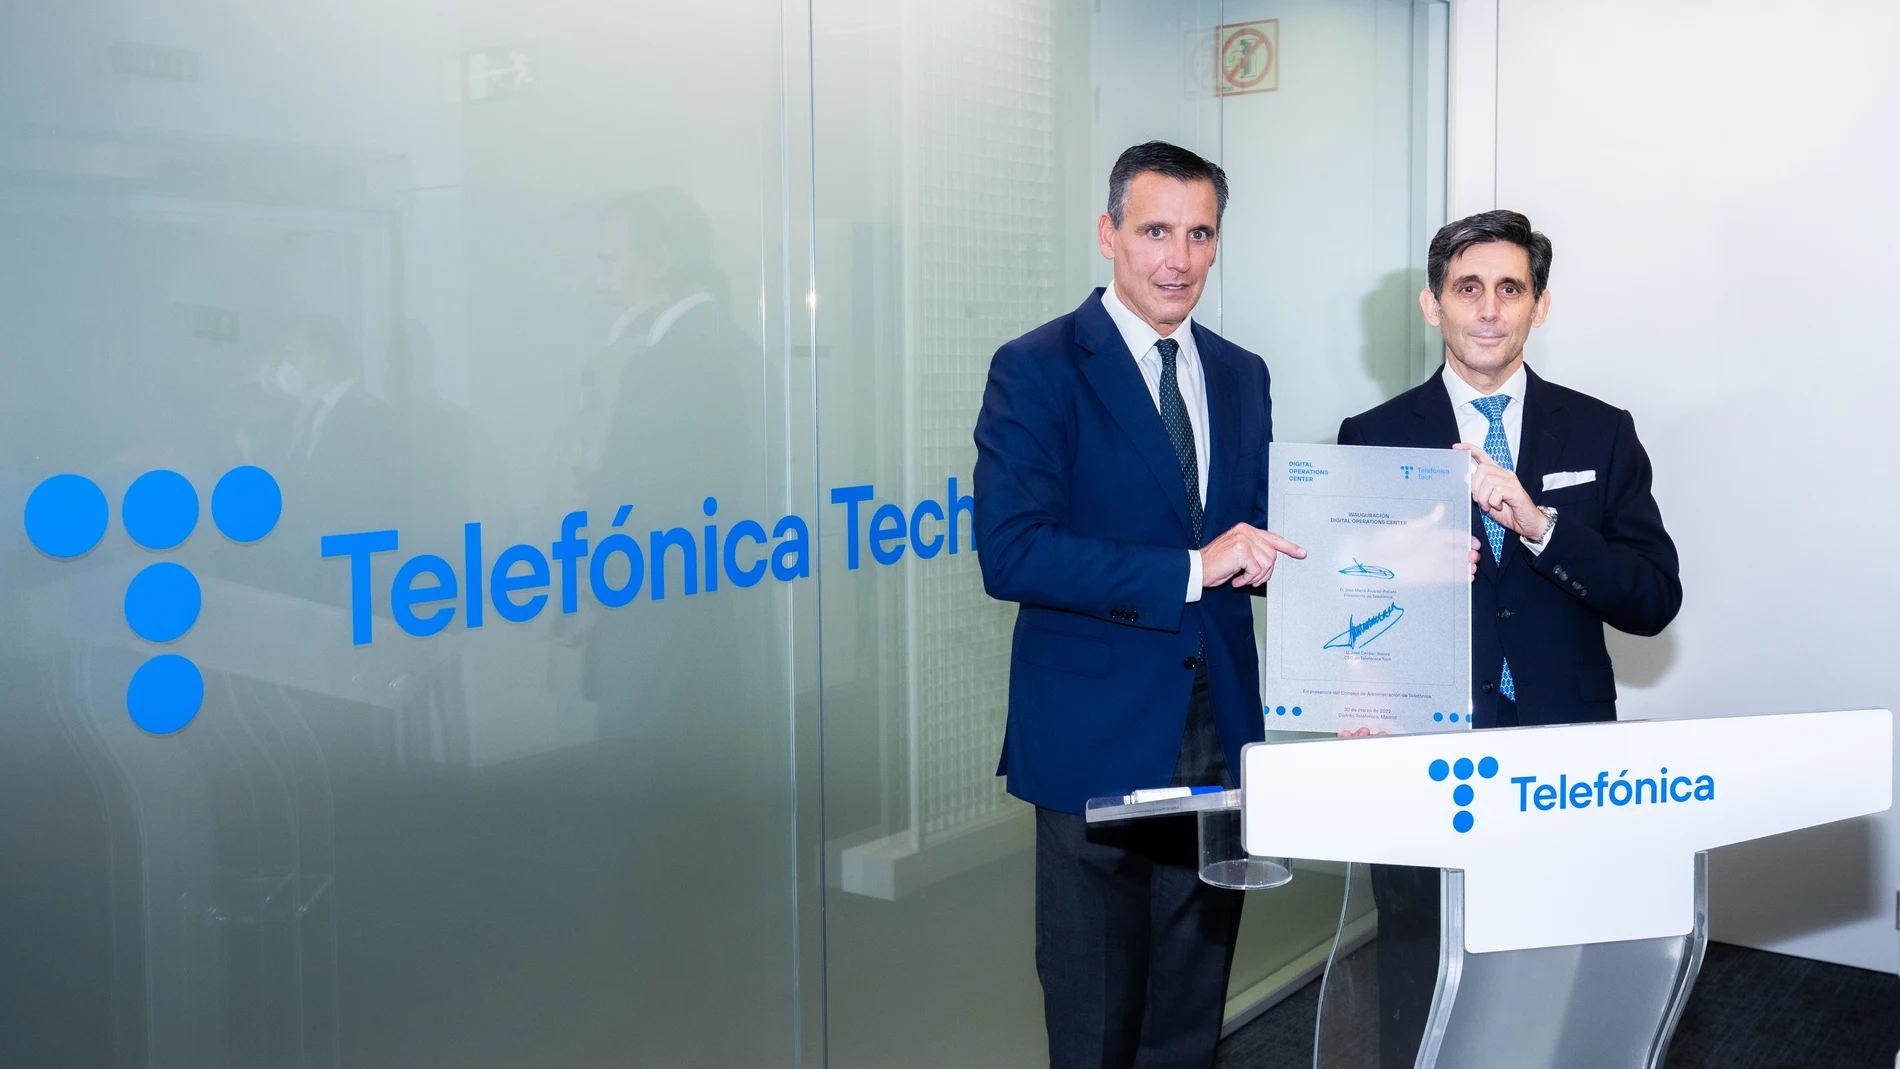 De derecha a izquierda: José María Álvarez-Pallete, presidente de Telefónica, junto a José Cerdán, CEO de Telefónica Tech